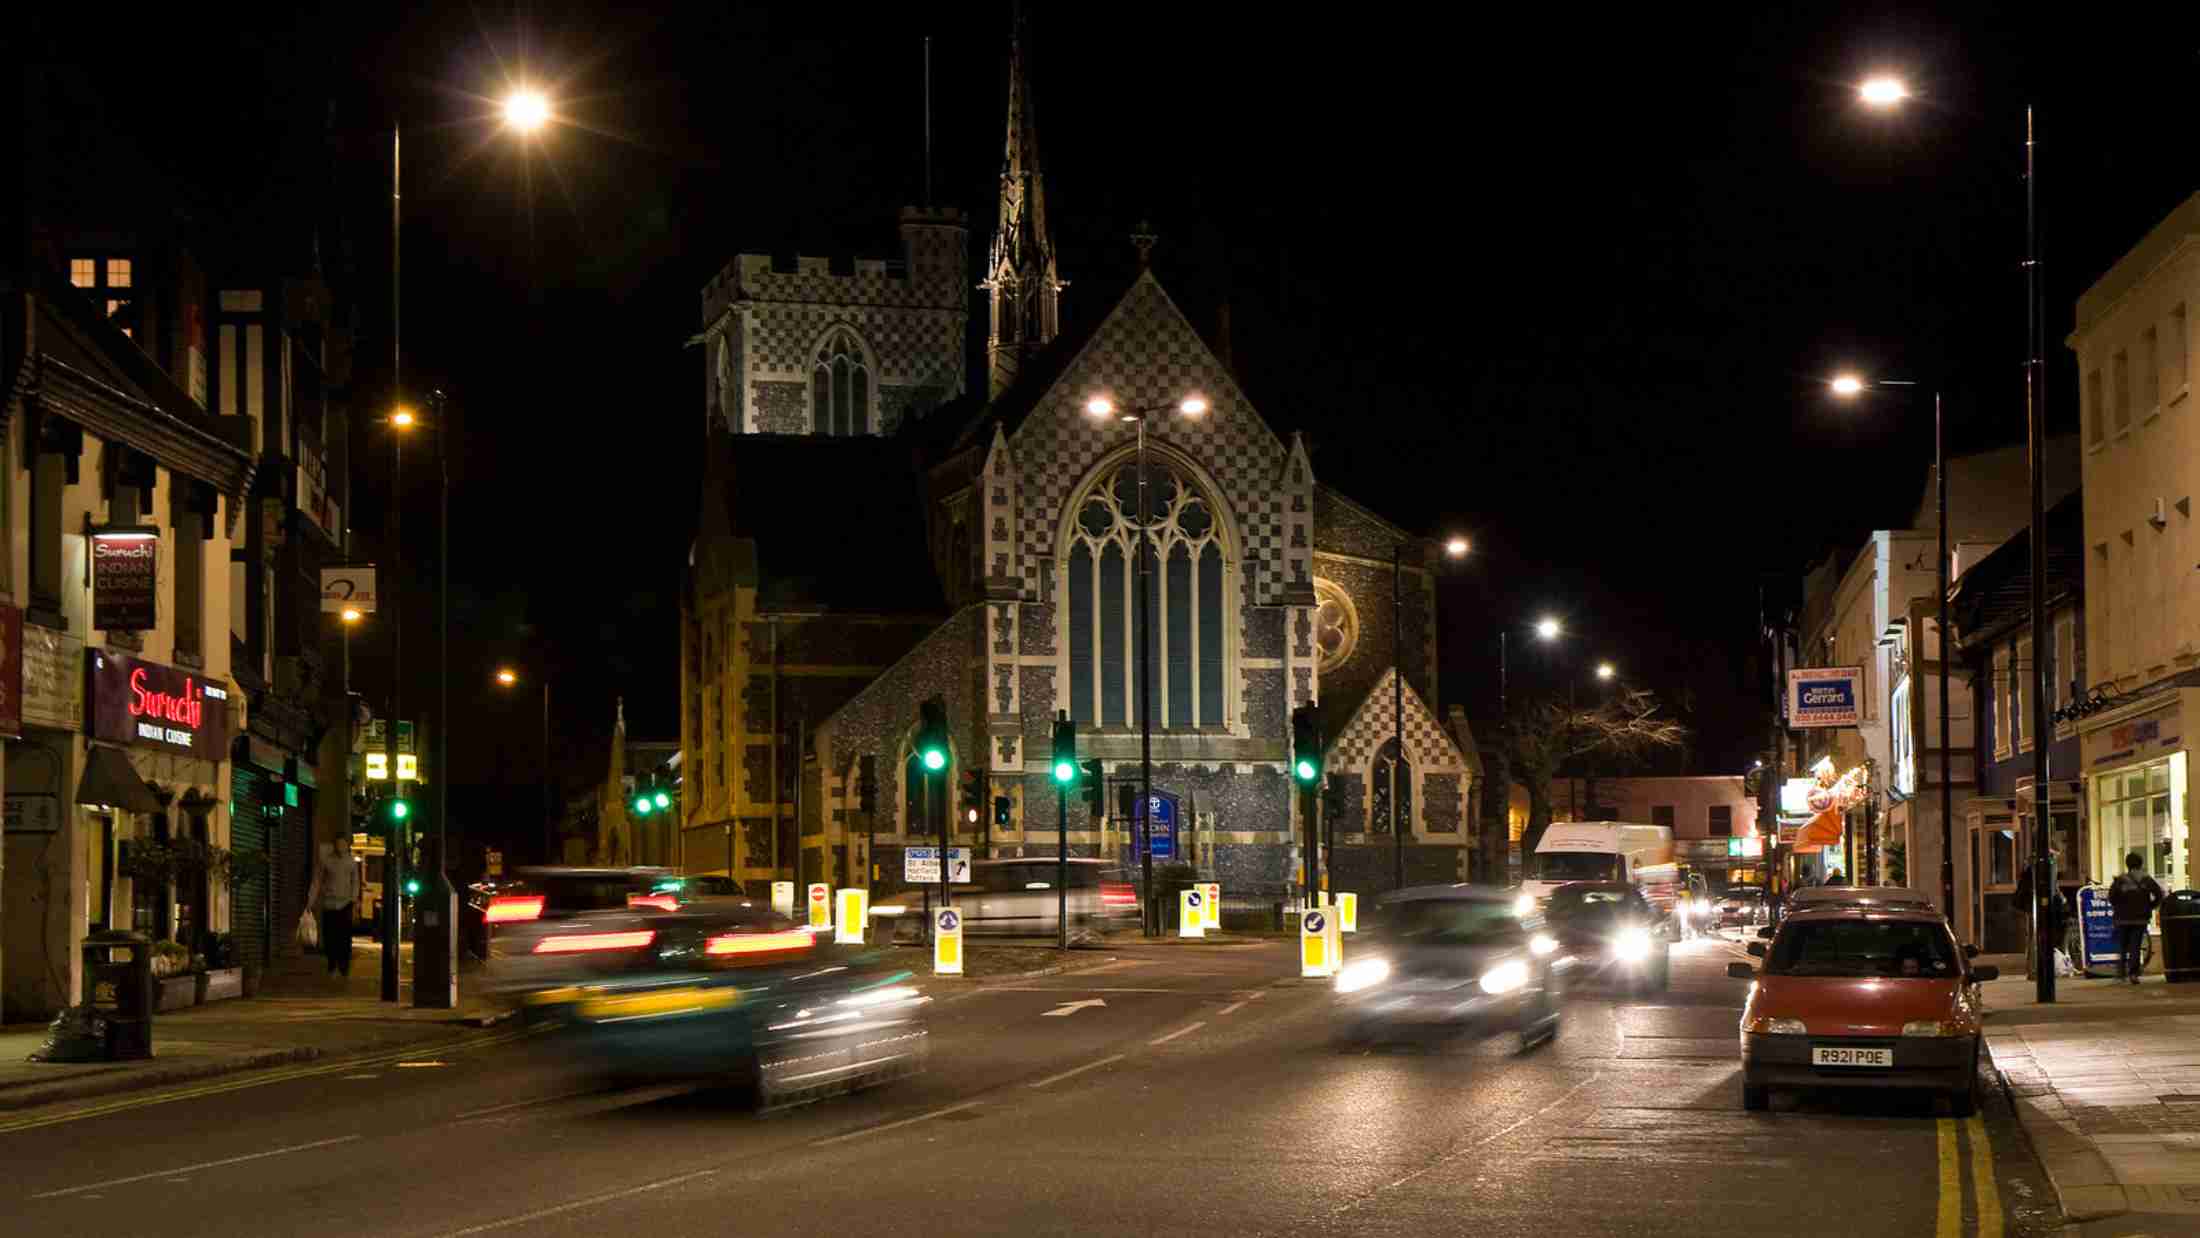 Traffic at night in Barnet, London